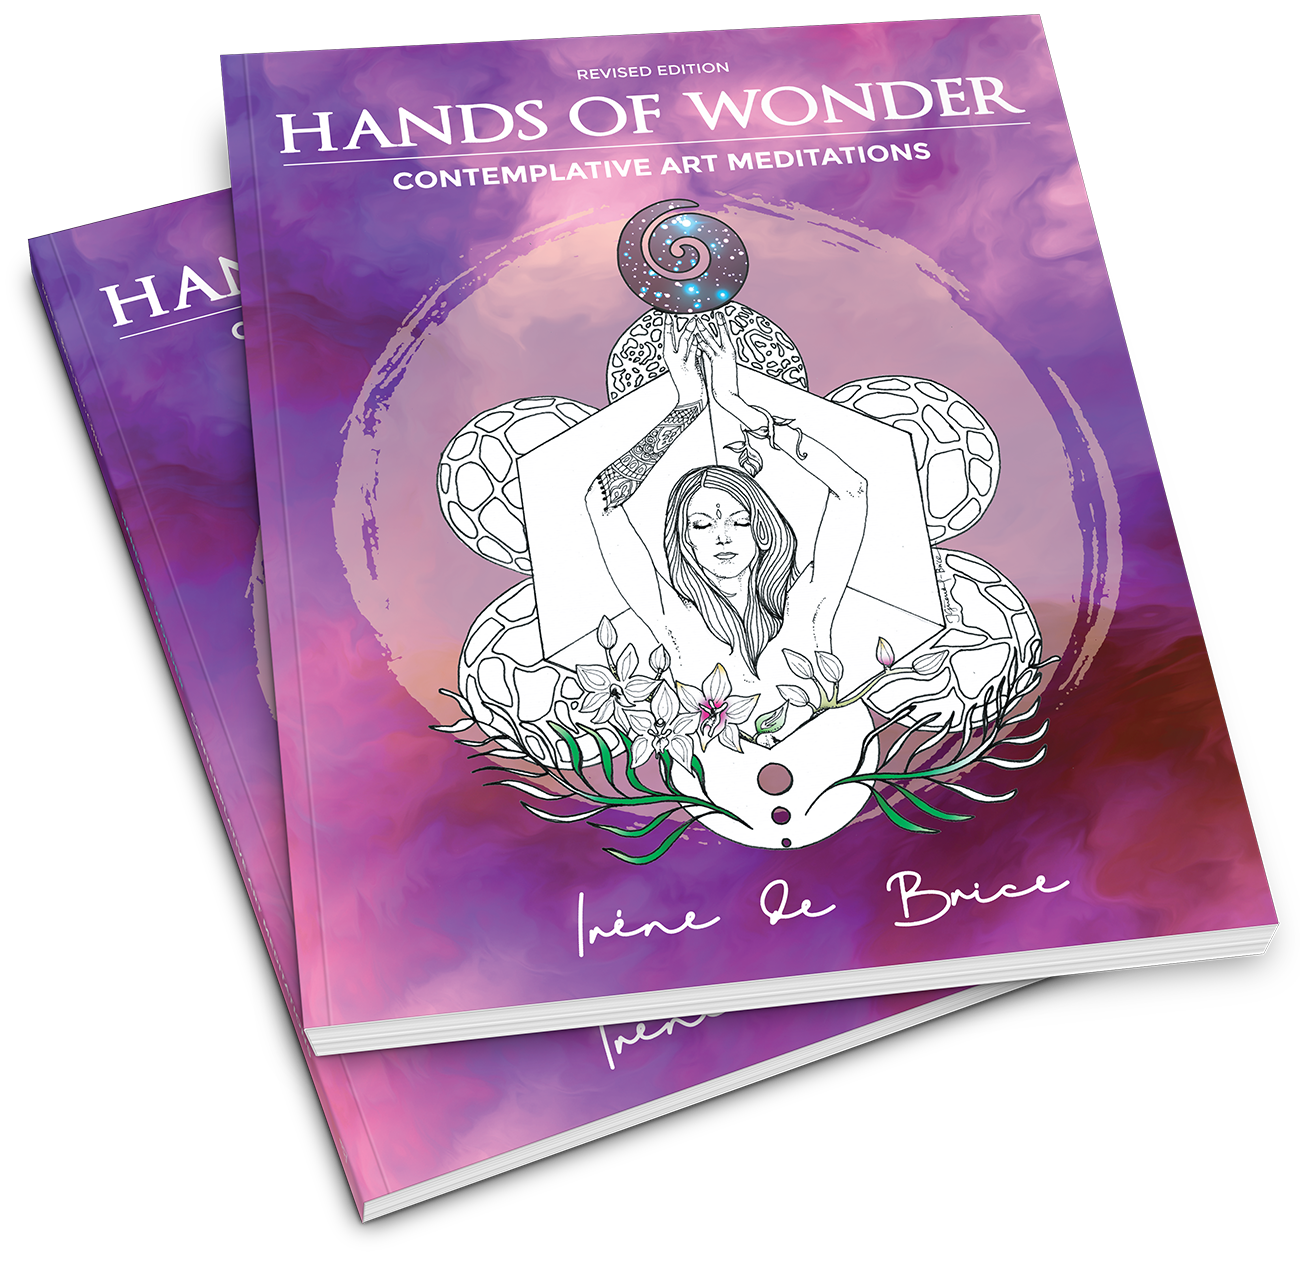 Creative Alchemy with Hands of Wonder author, artist and self healer Irene de Brice